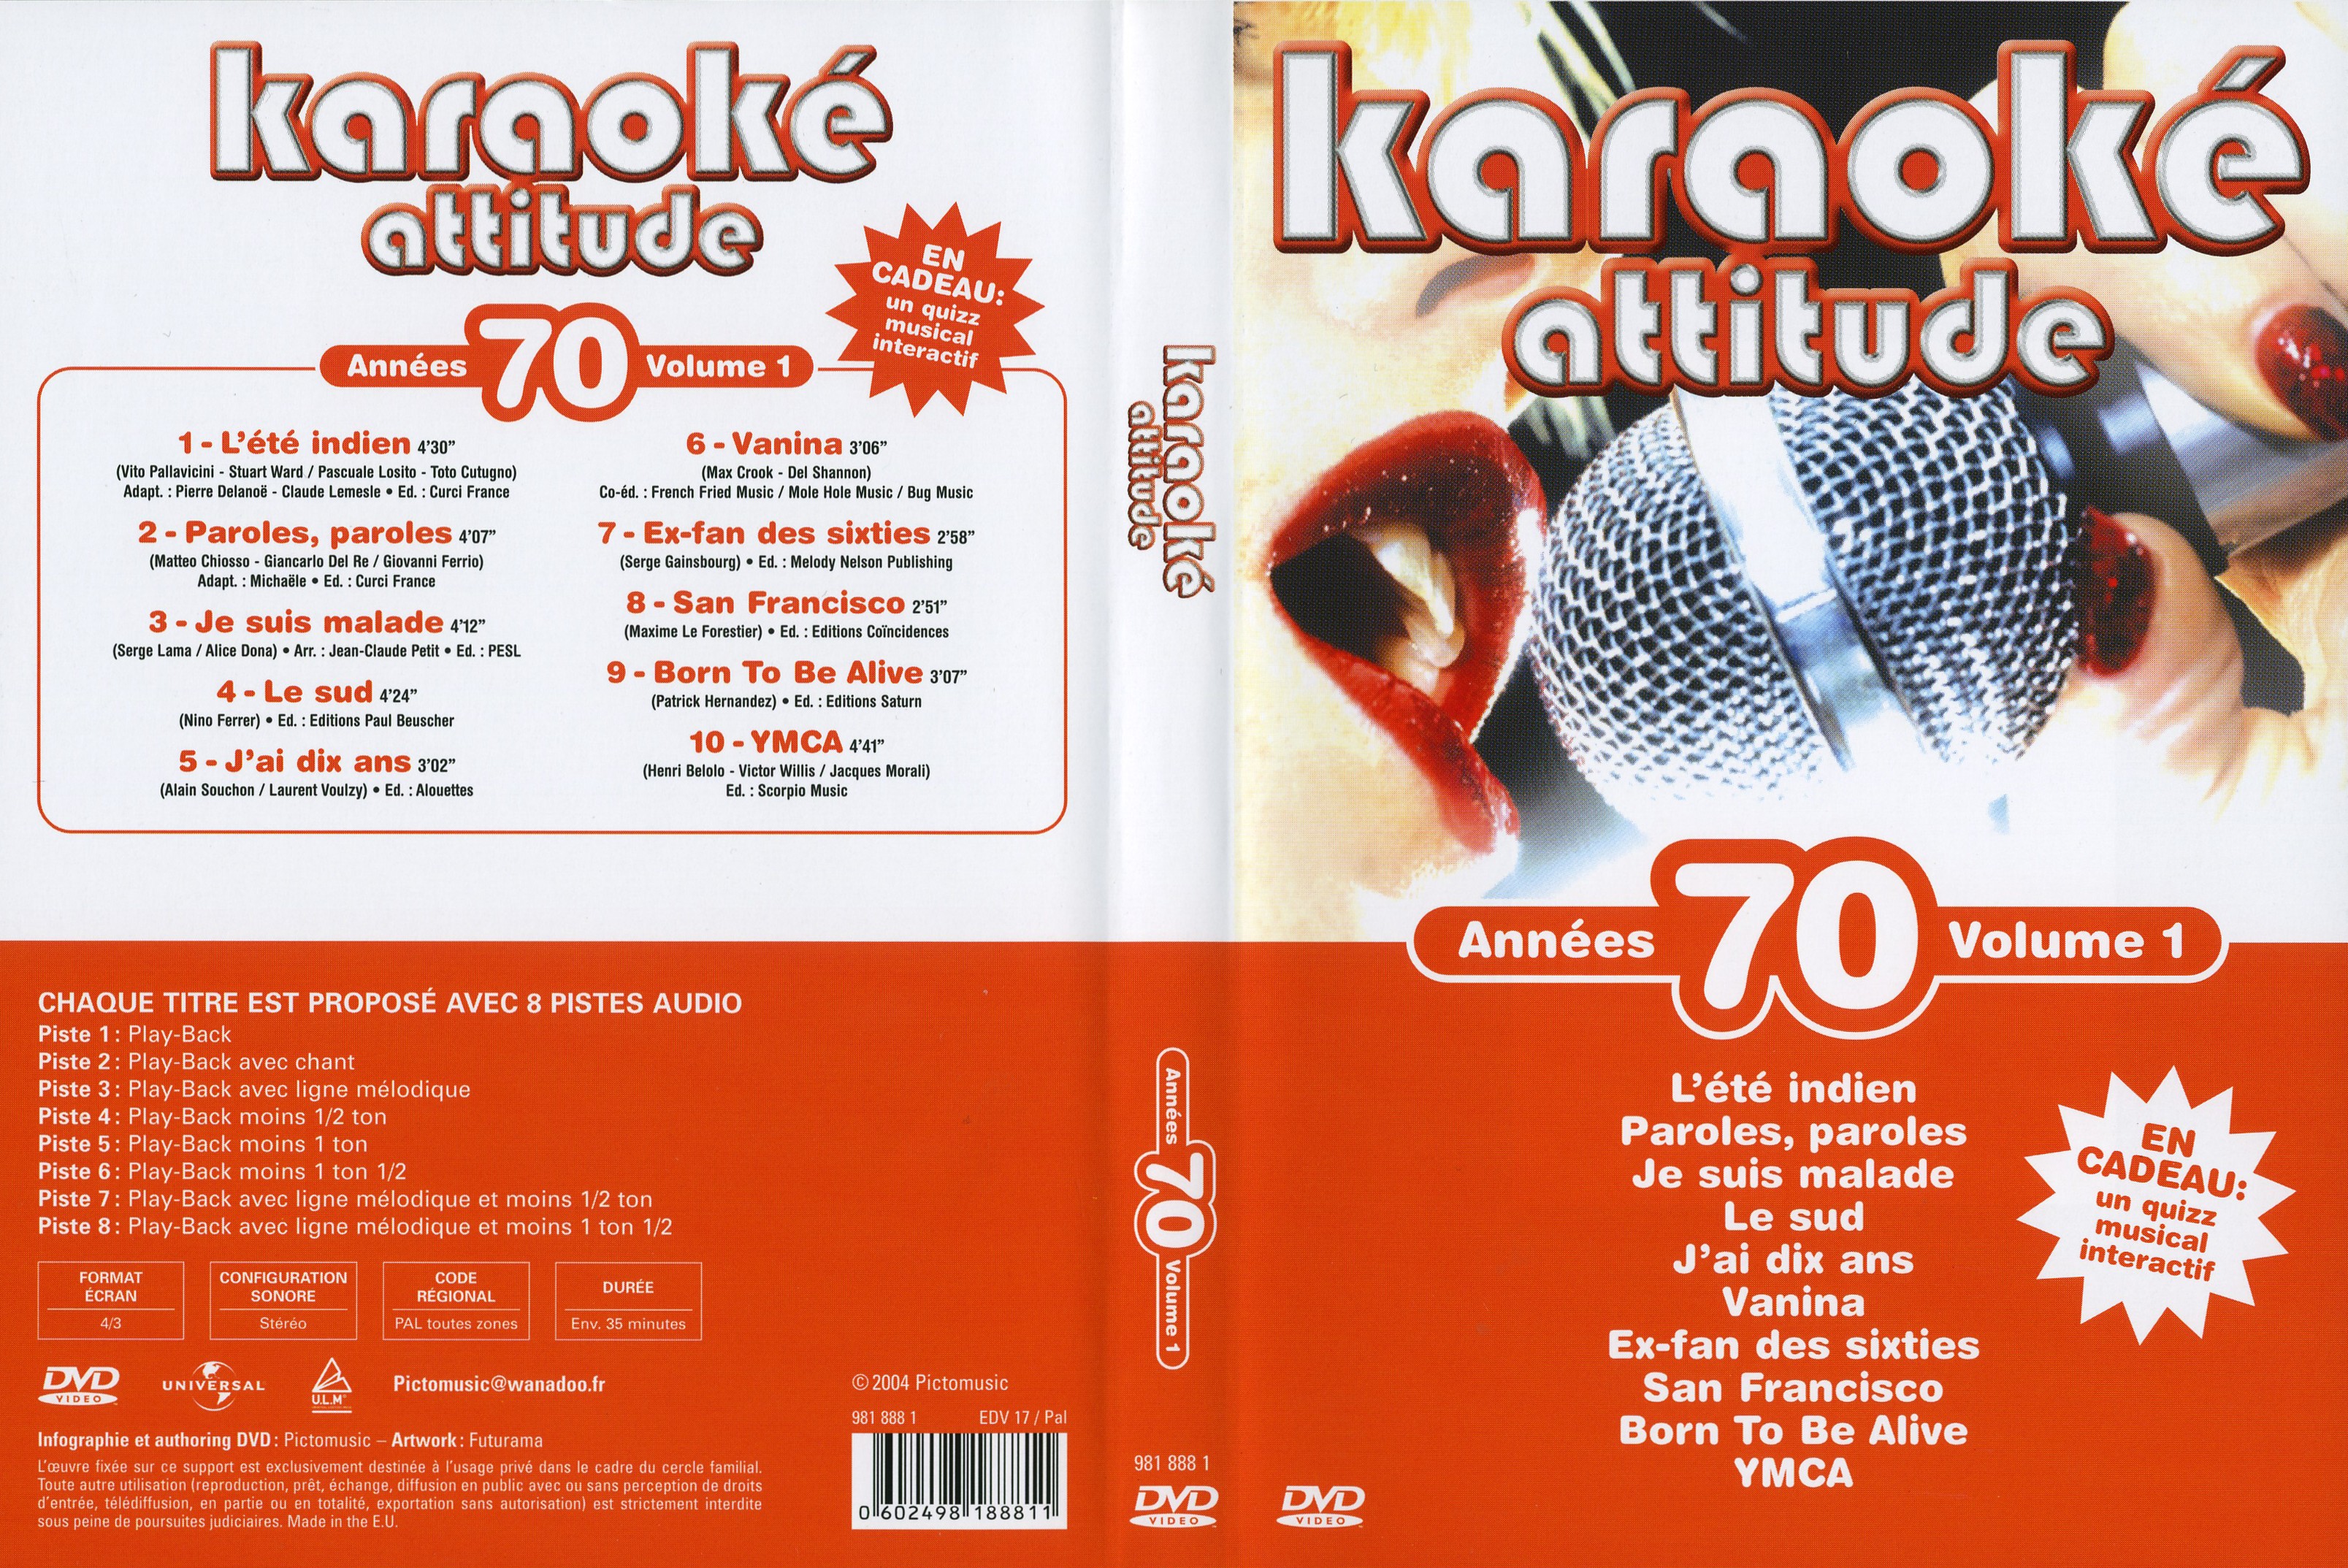 Jaquette DVD Karaok Attitude Annes 70 vol 1